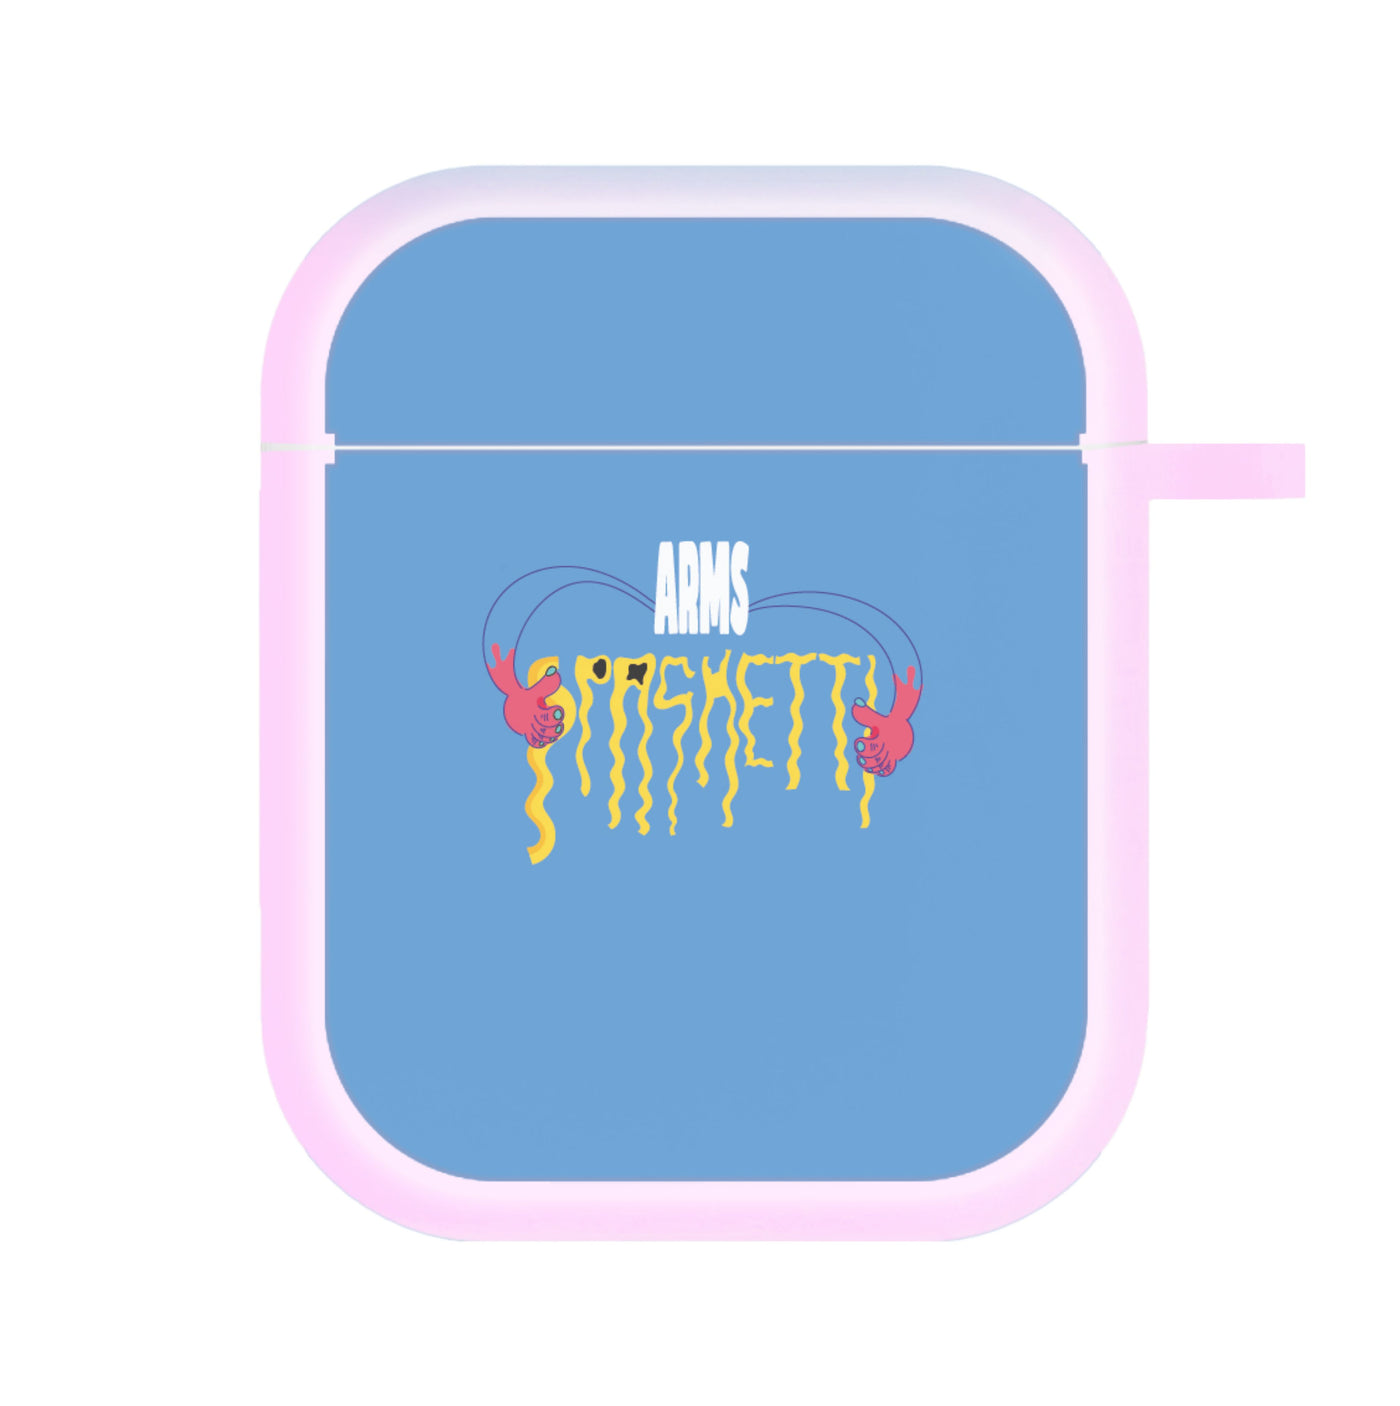 Arms Spaghetti - Blue AirPods Case